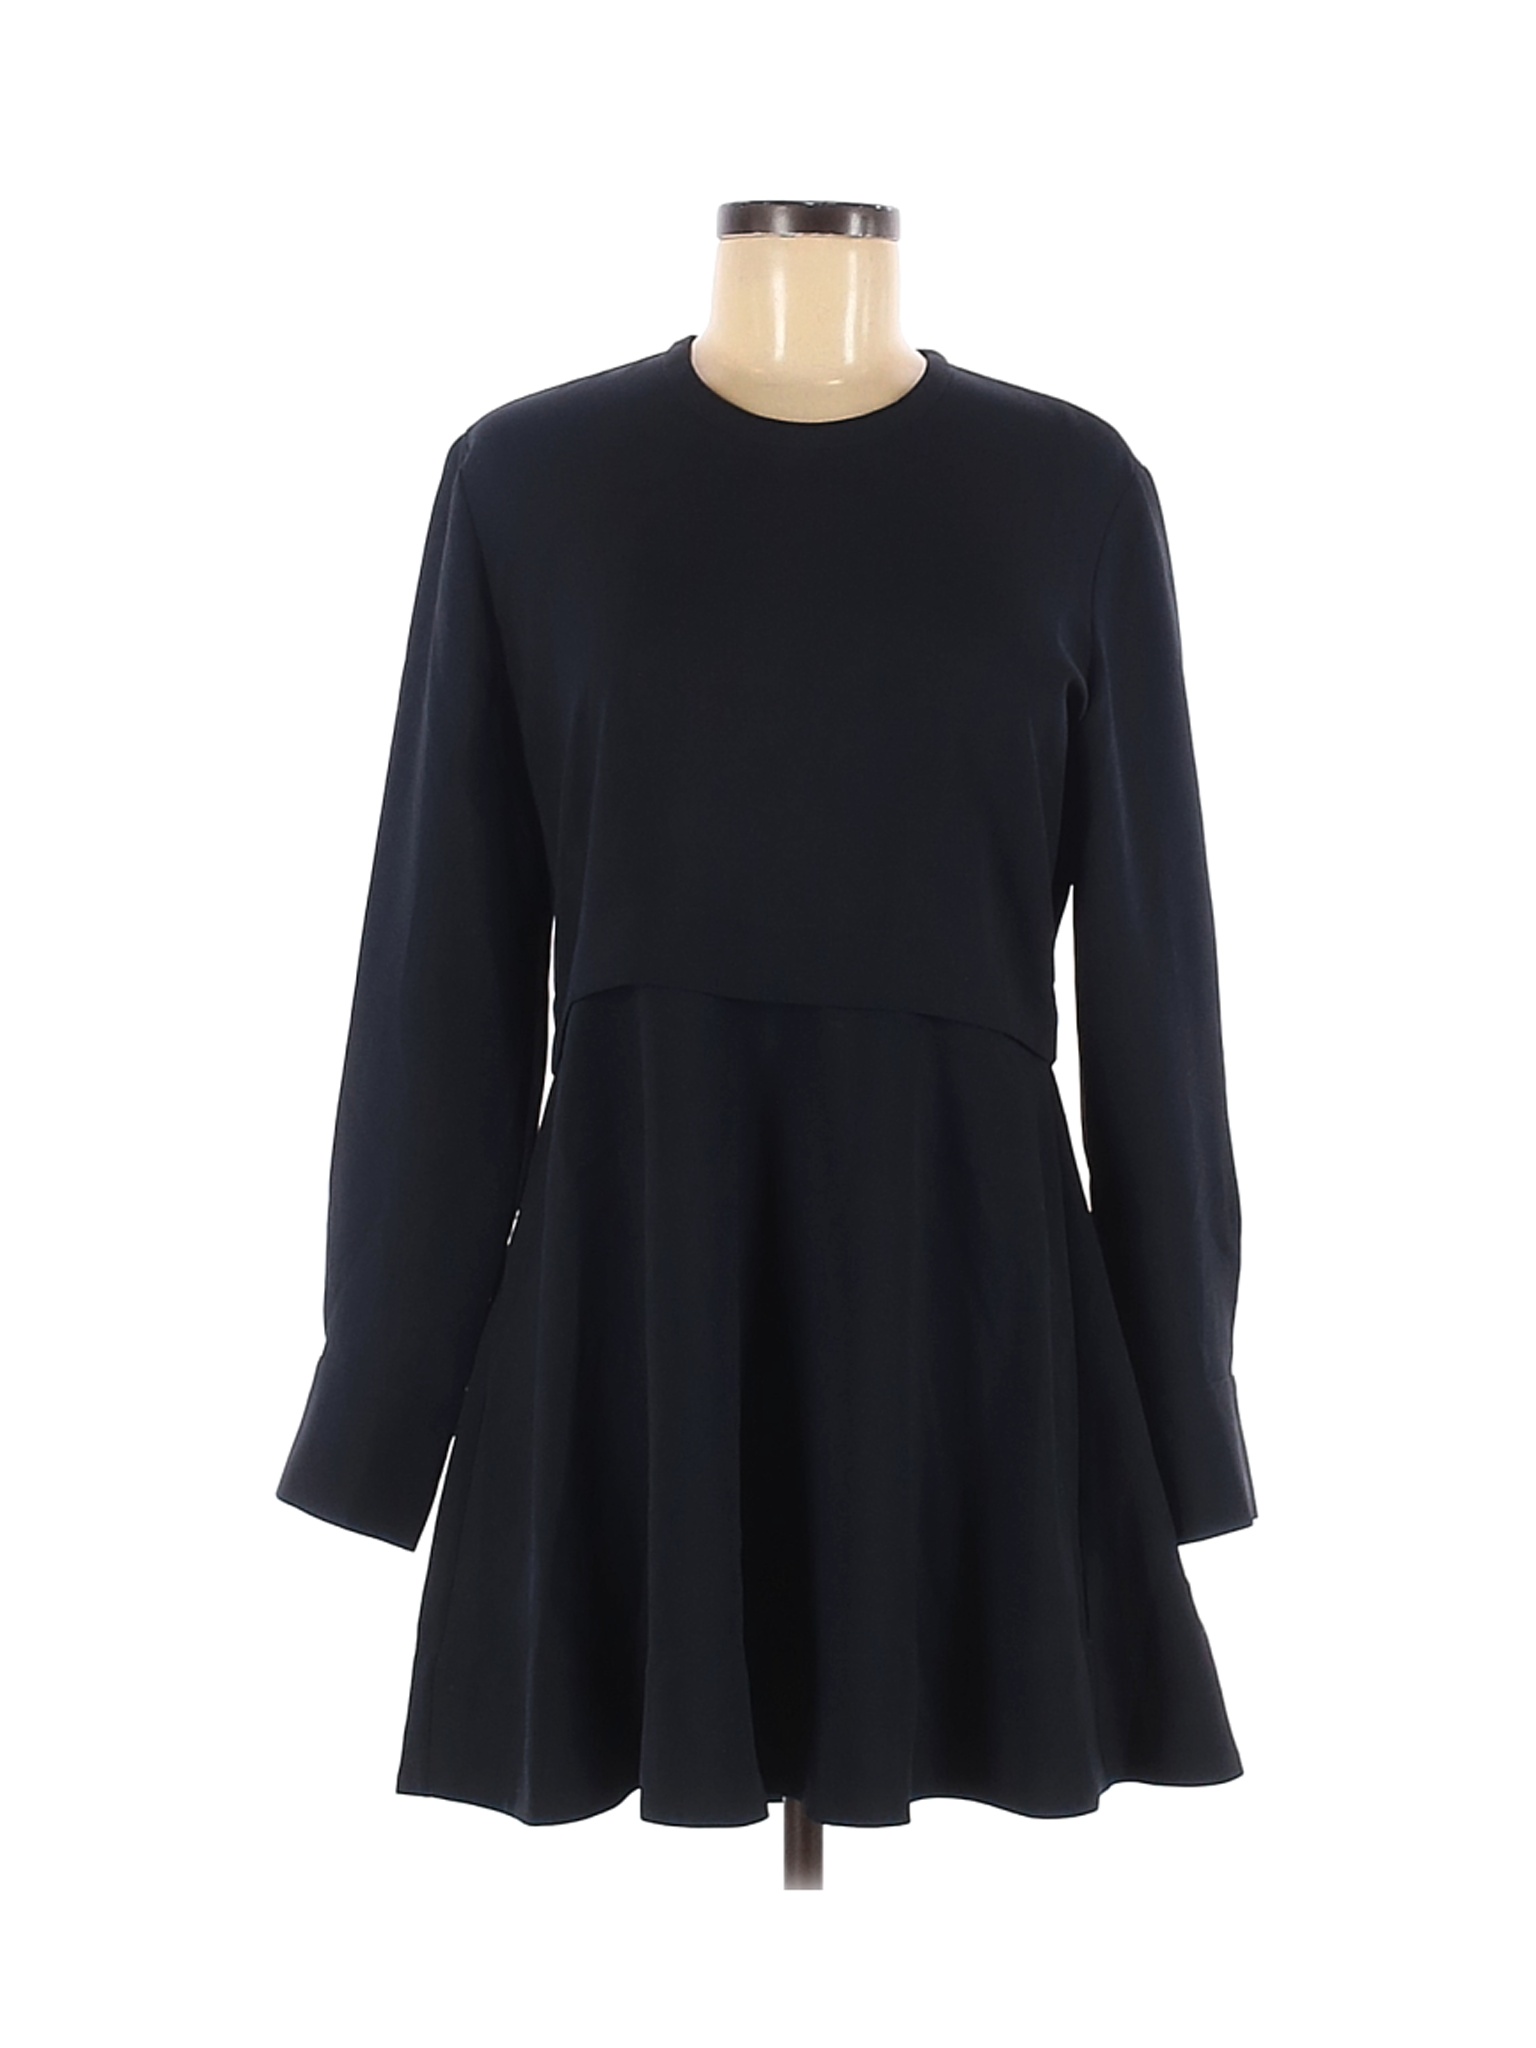 IRO Women Black Casual Dress 42 french | eBay